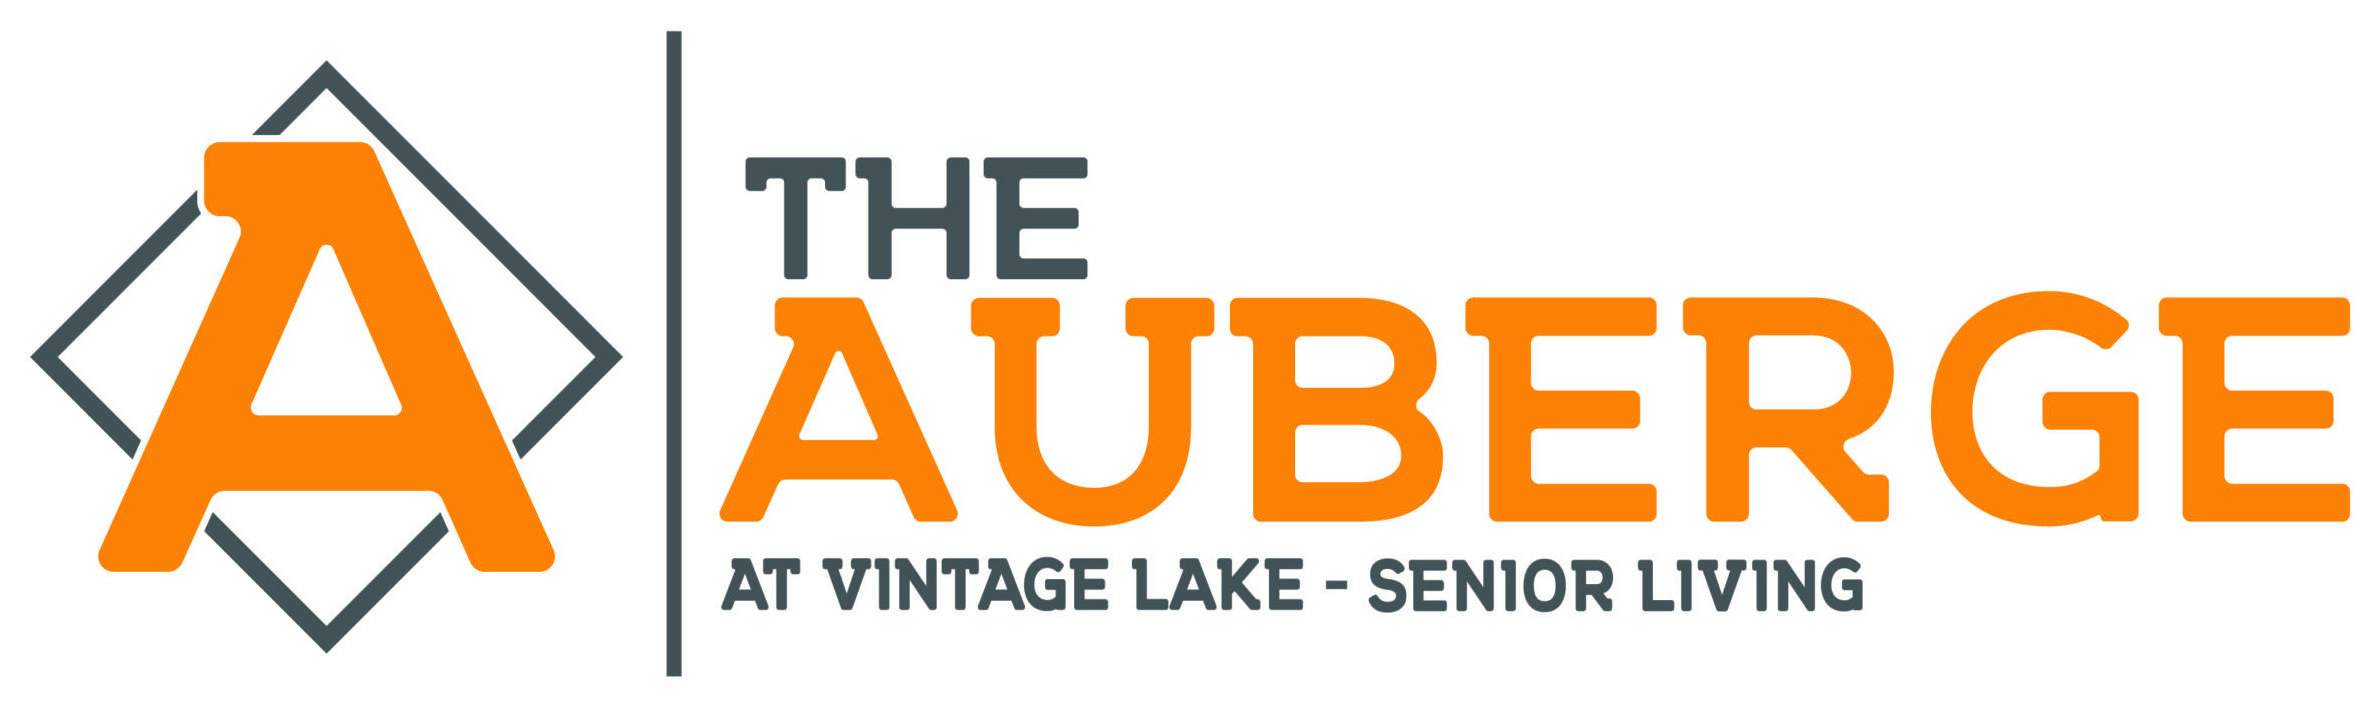 The Auberge at Vintage Lake